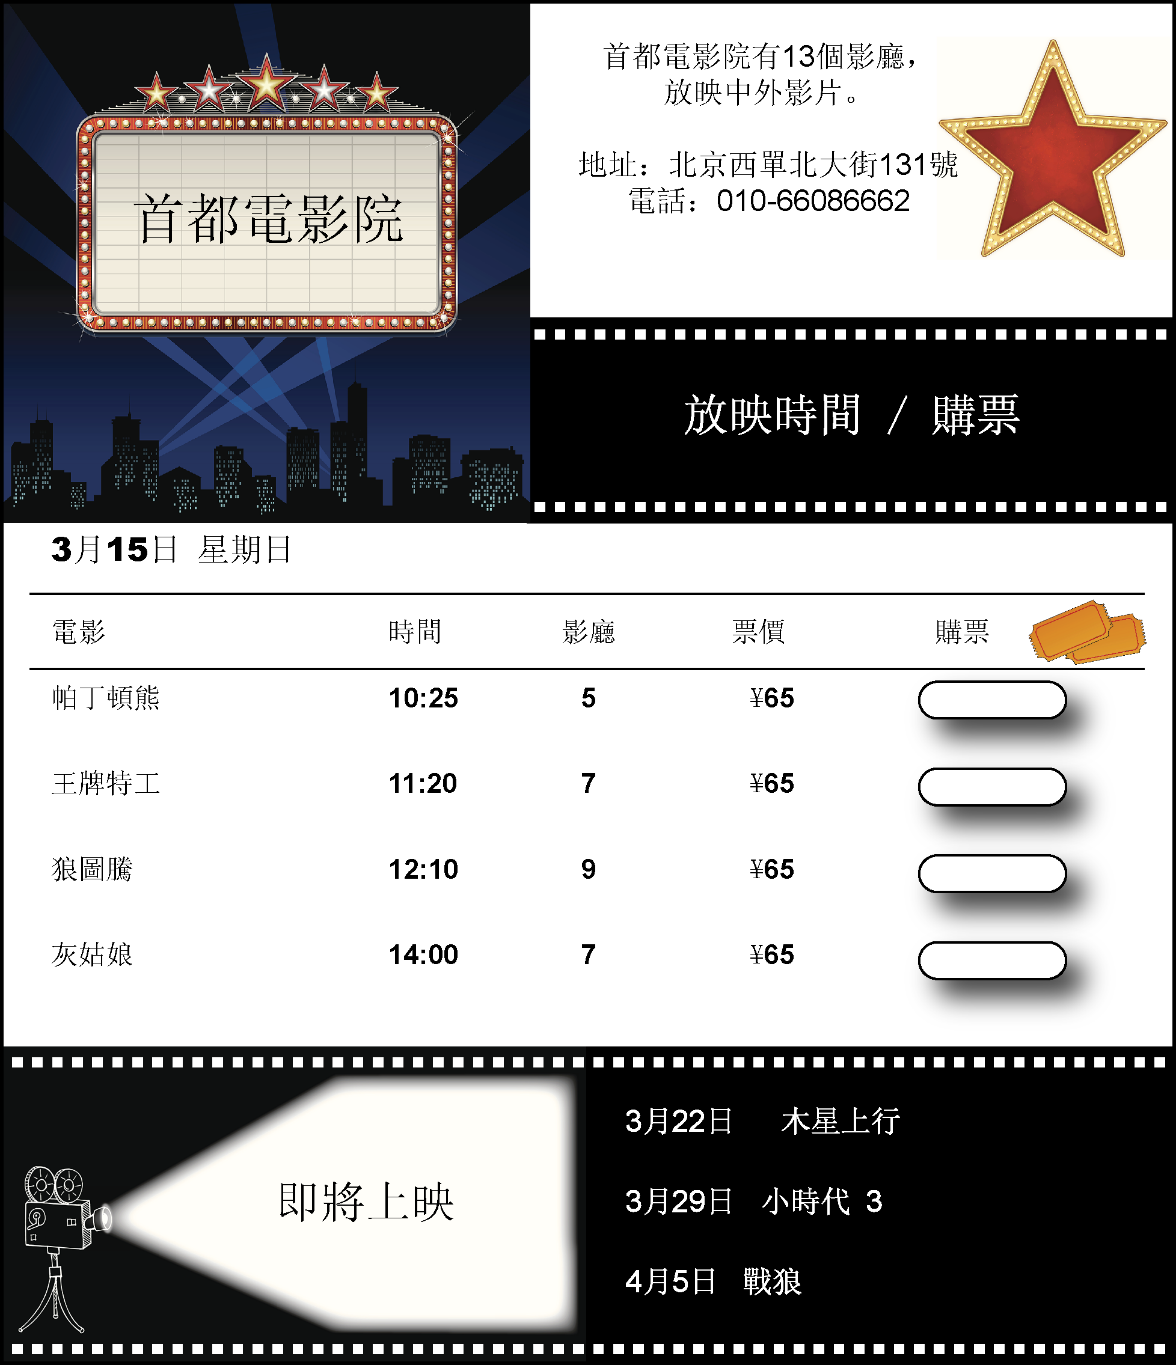 Exhibit - movie ticket advertisement in Mandarin (Traditional)